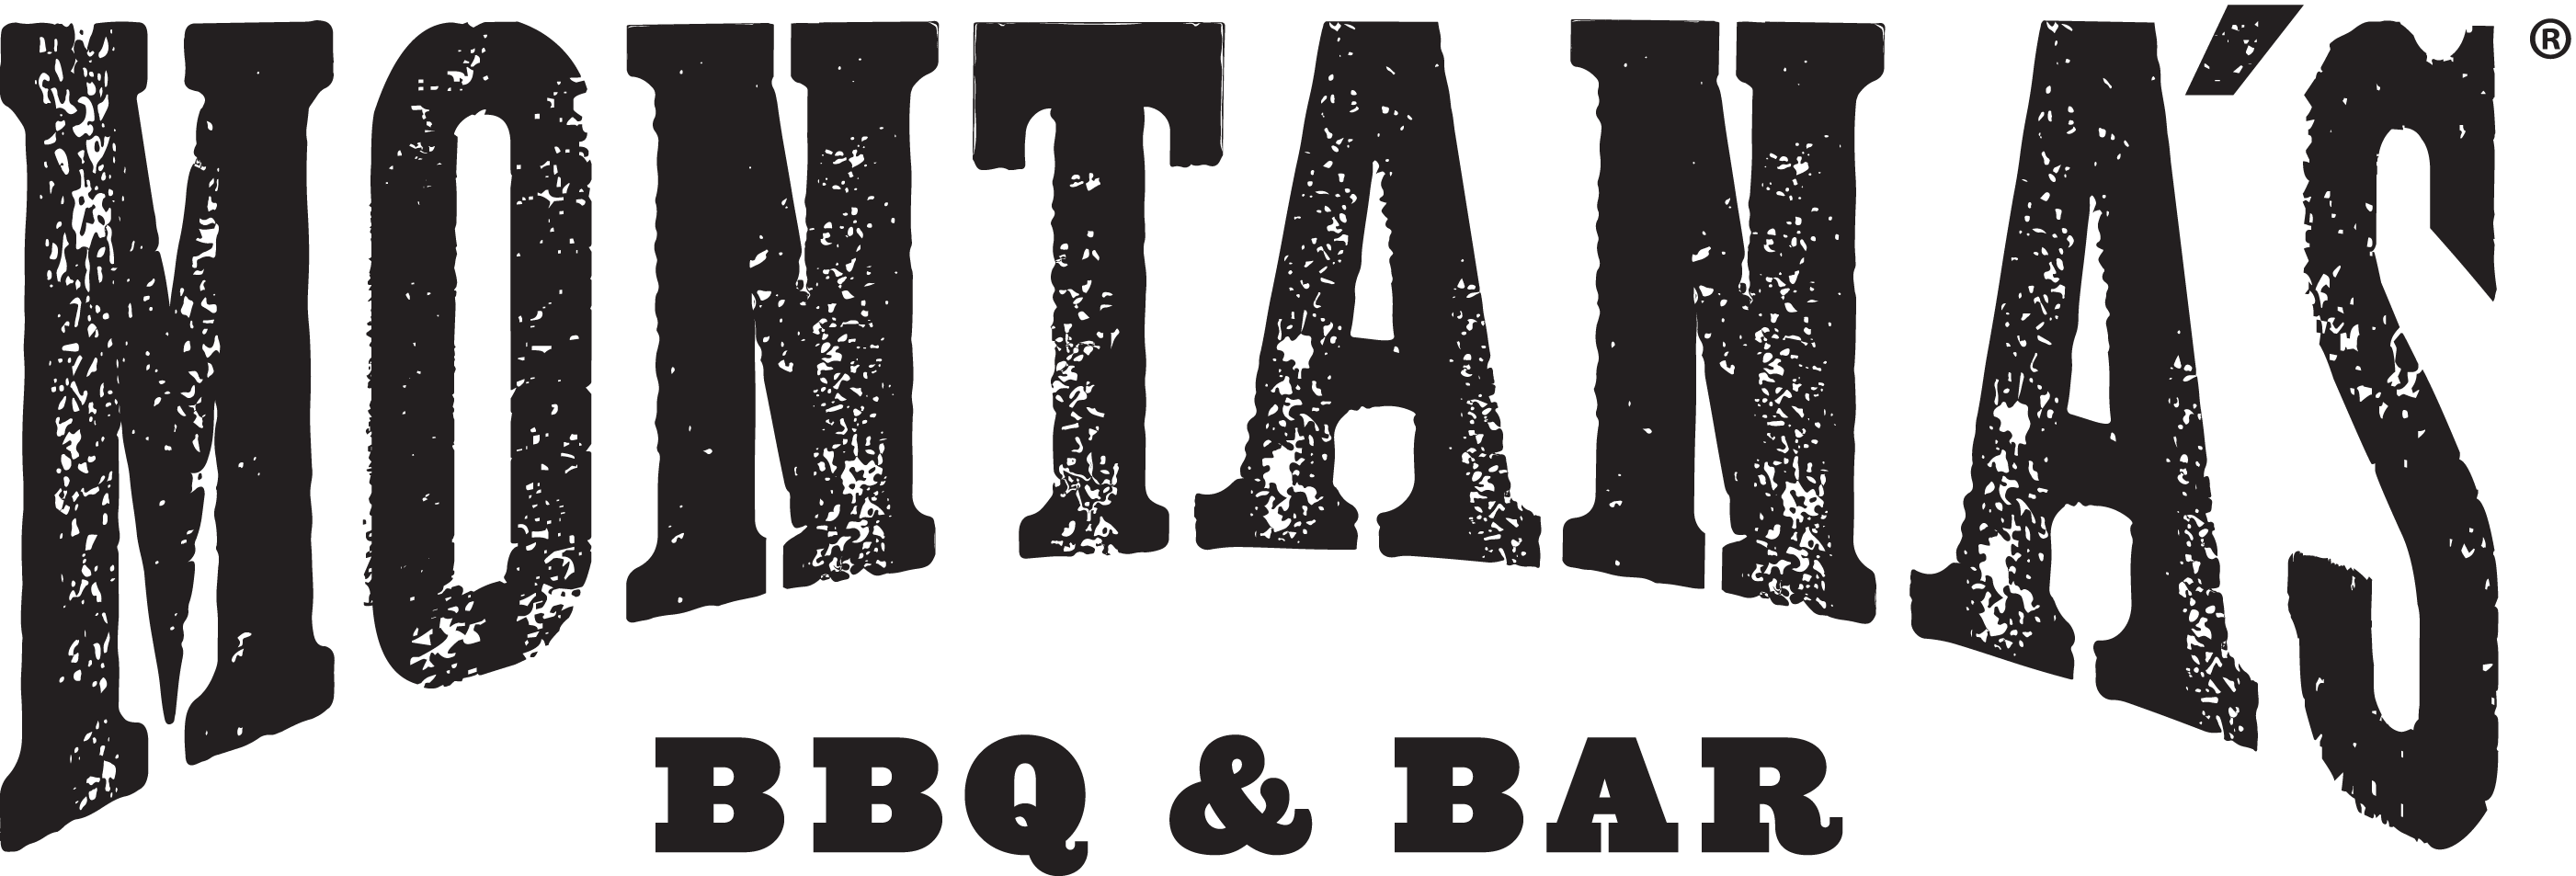 Montana's BBQ & Bar Logo